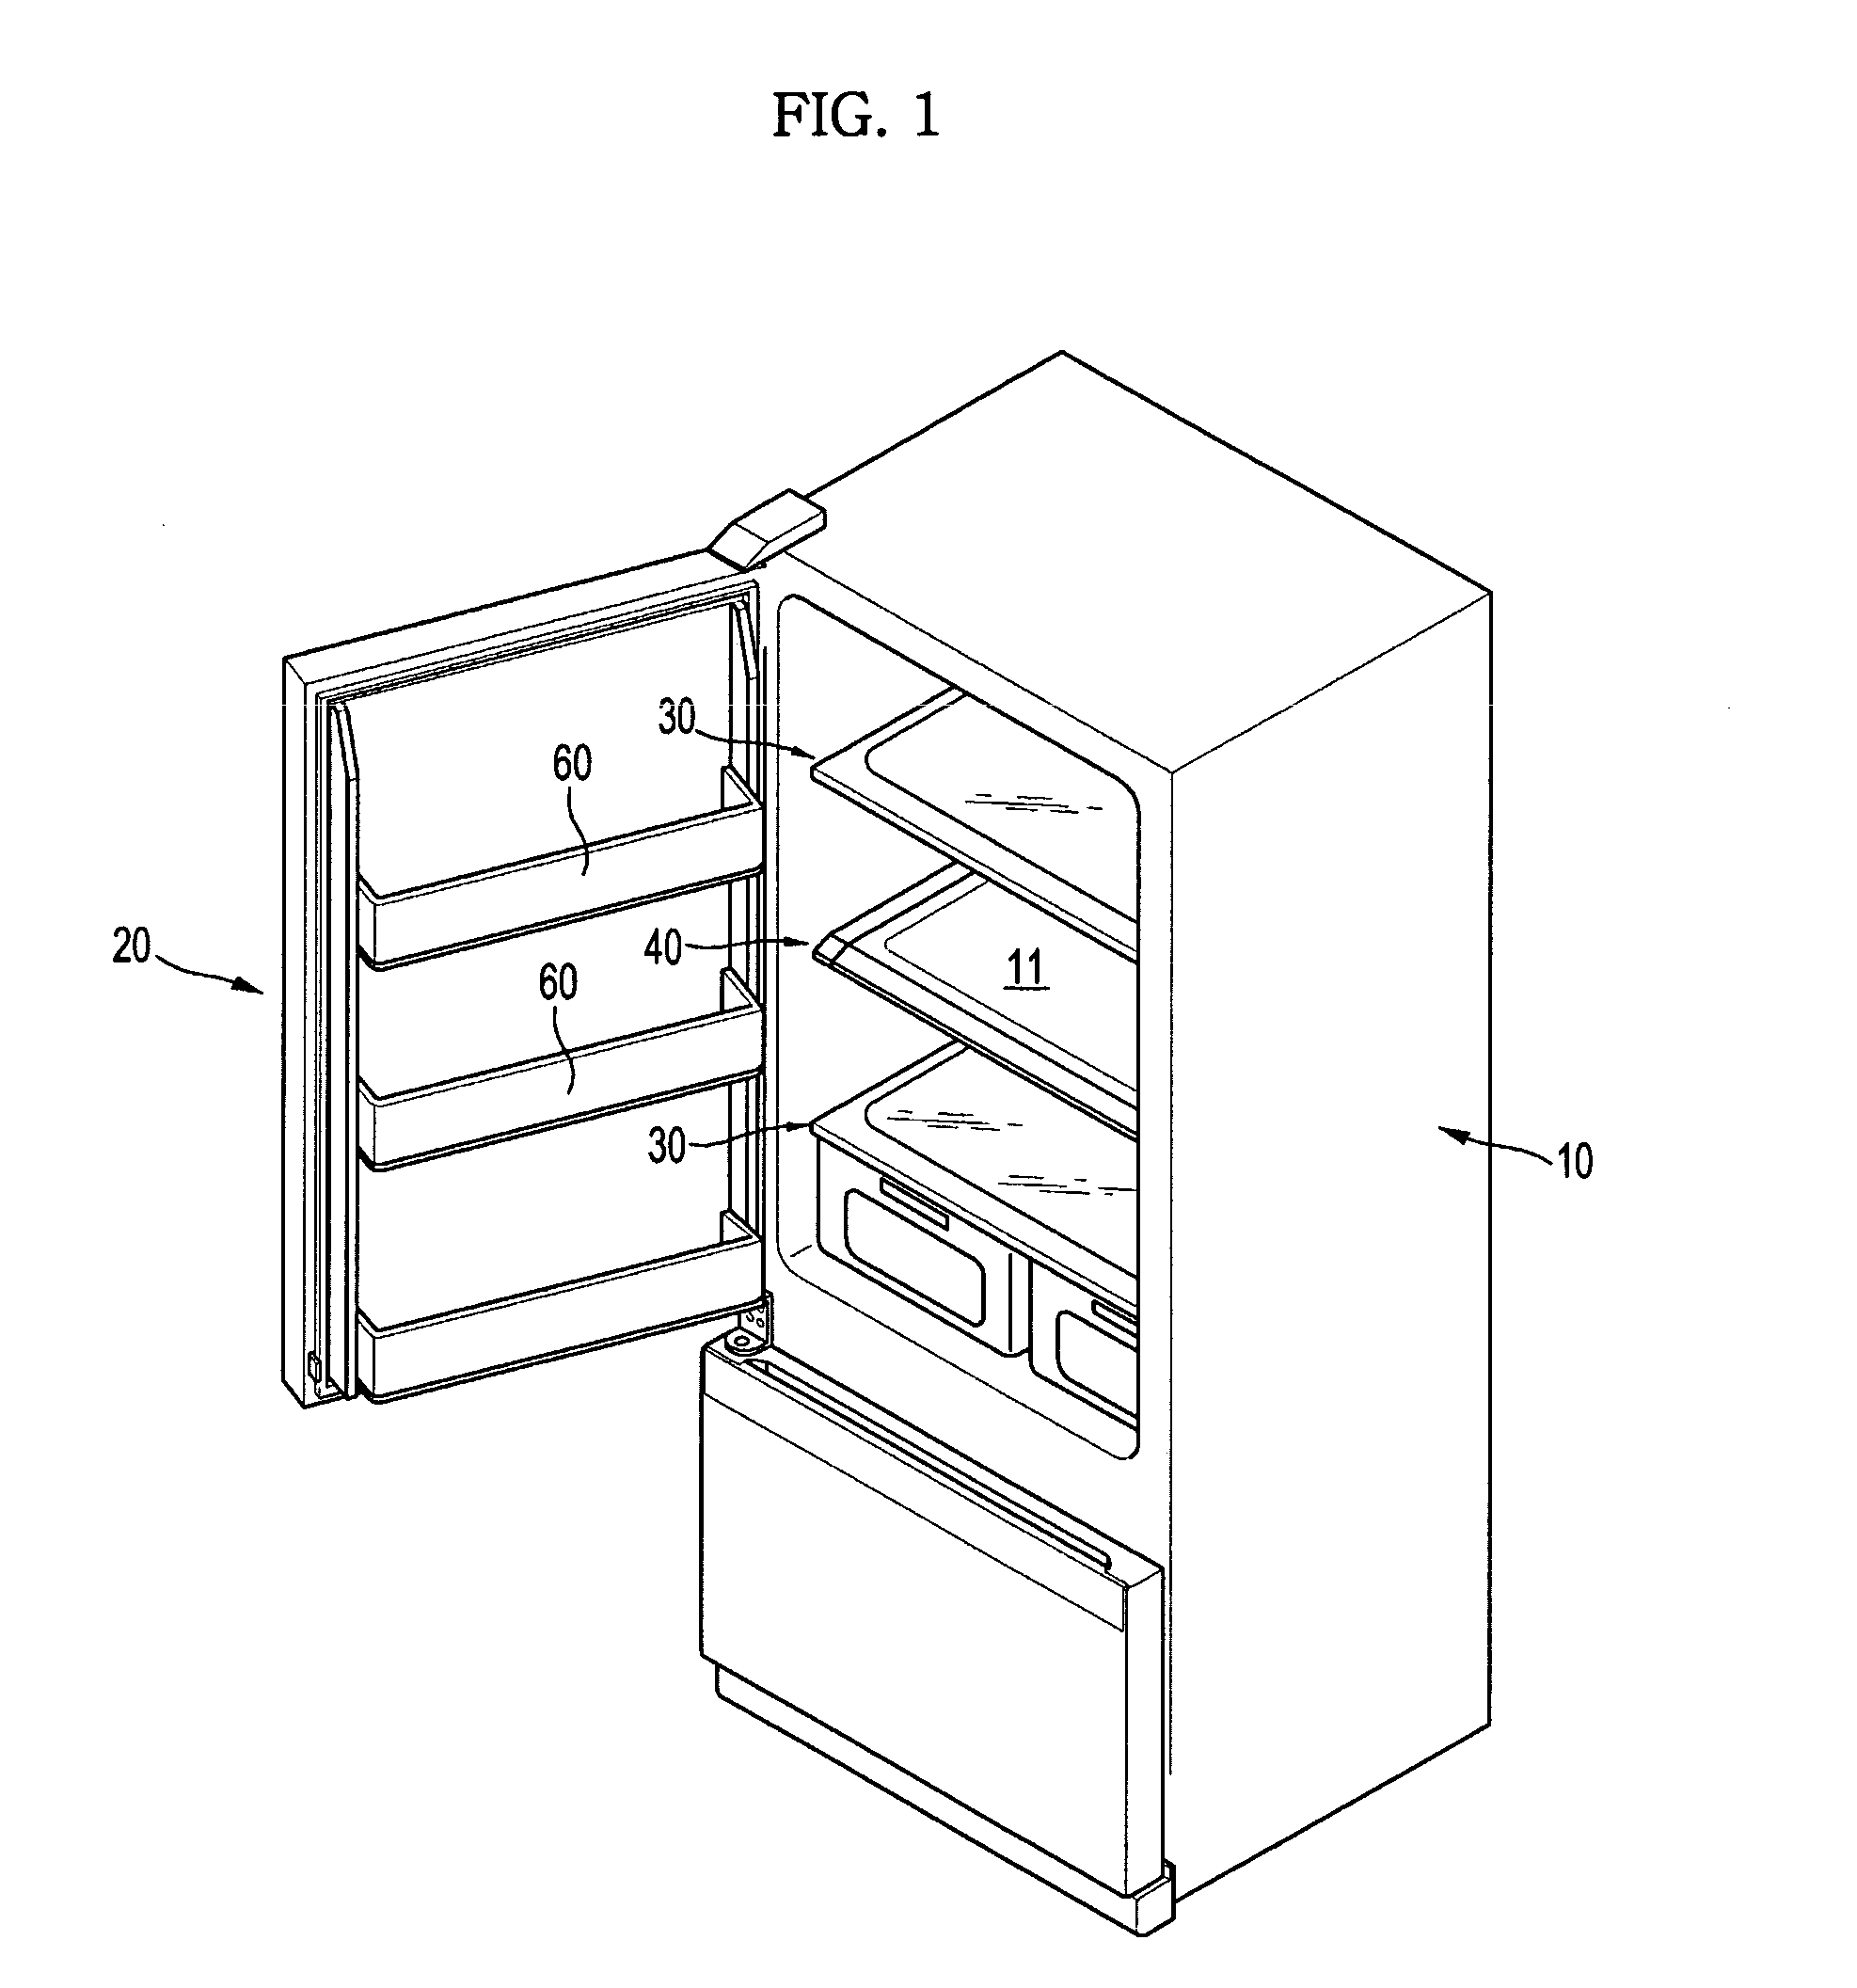 Variable shelf and refrigerator having the same